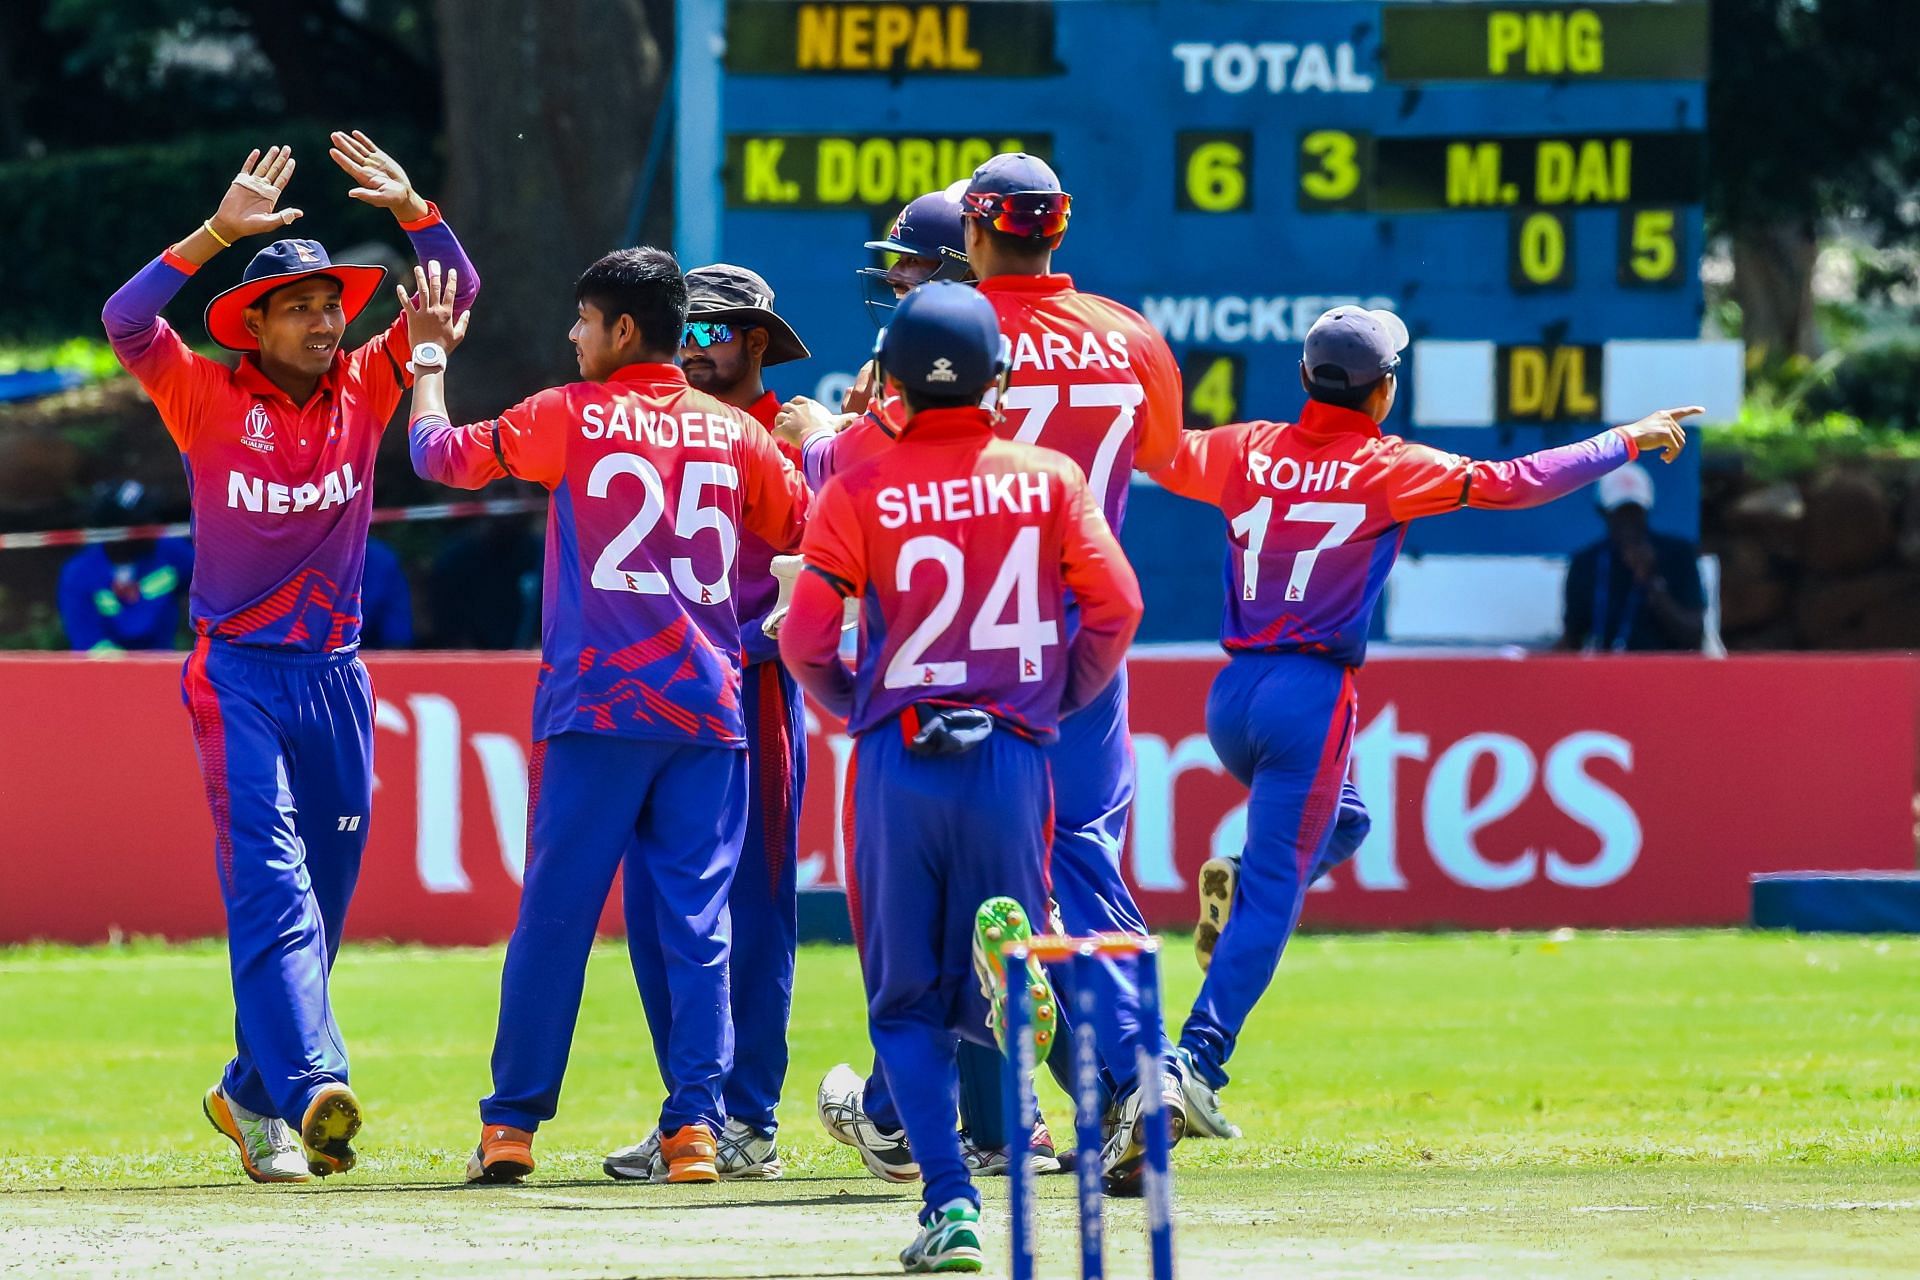 Nepal cricket team. (Credits: Twitter)